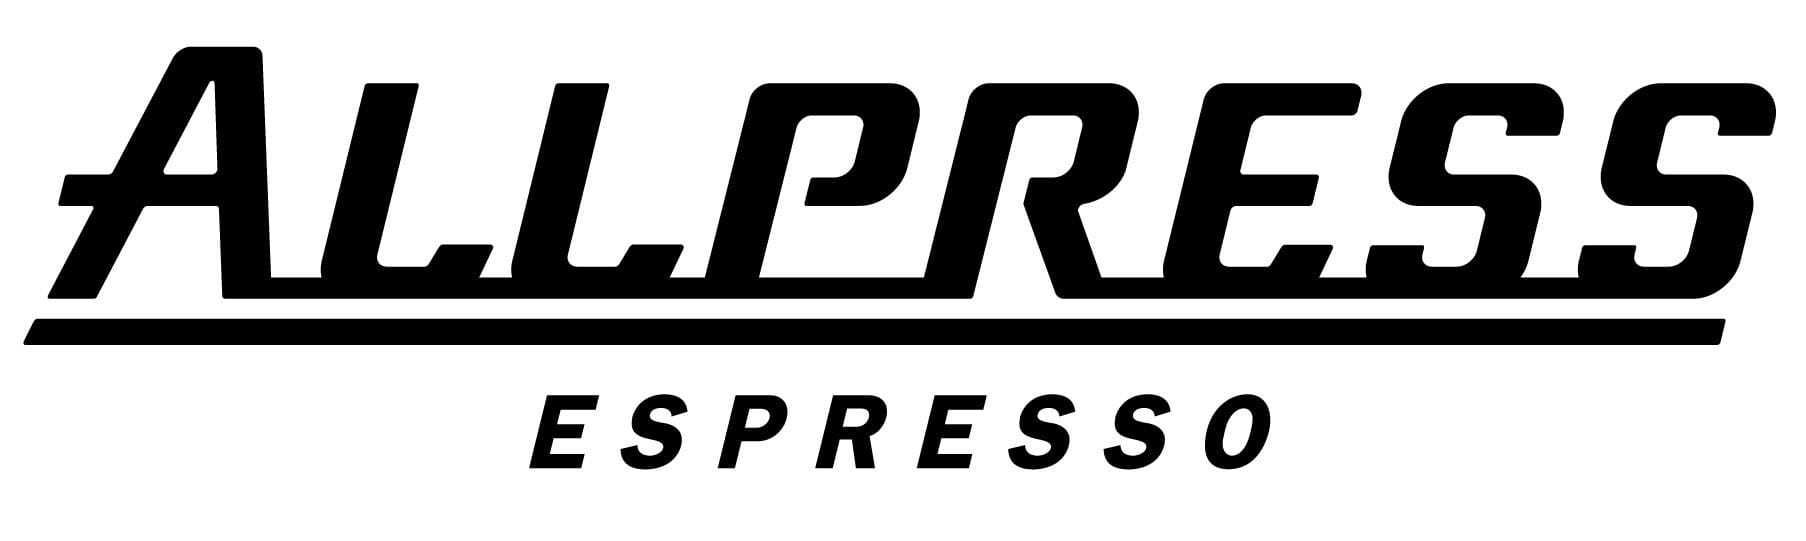 content_allpress-logo-high-res